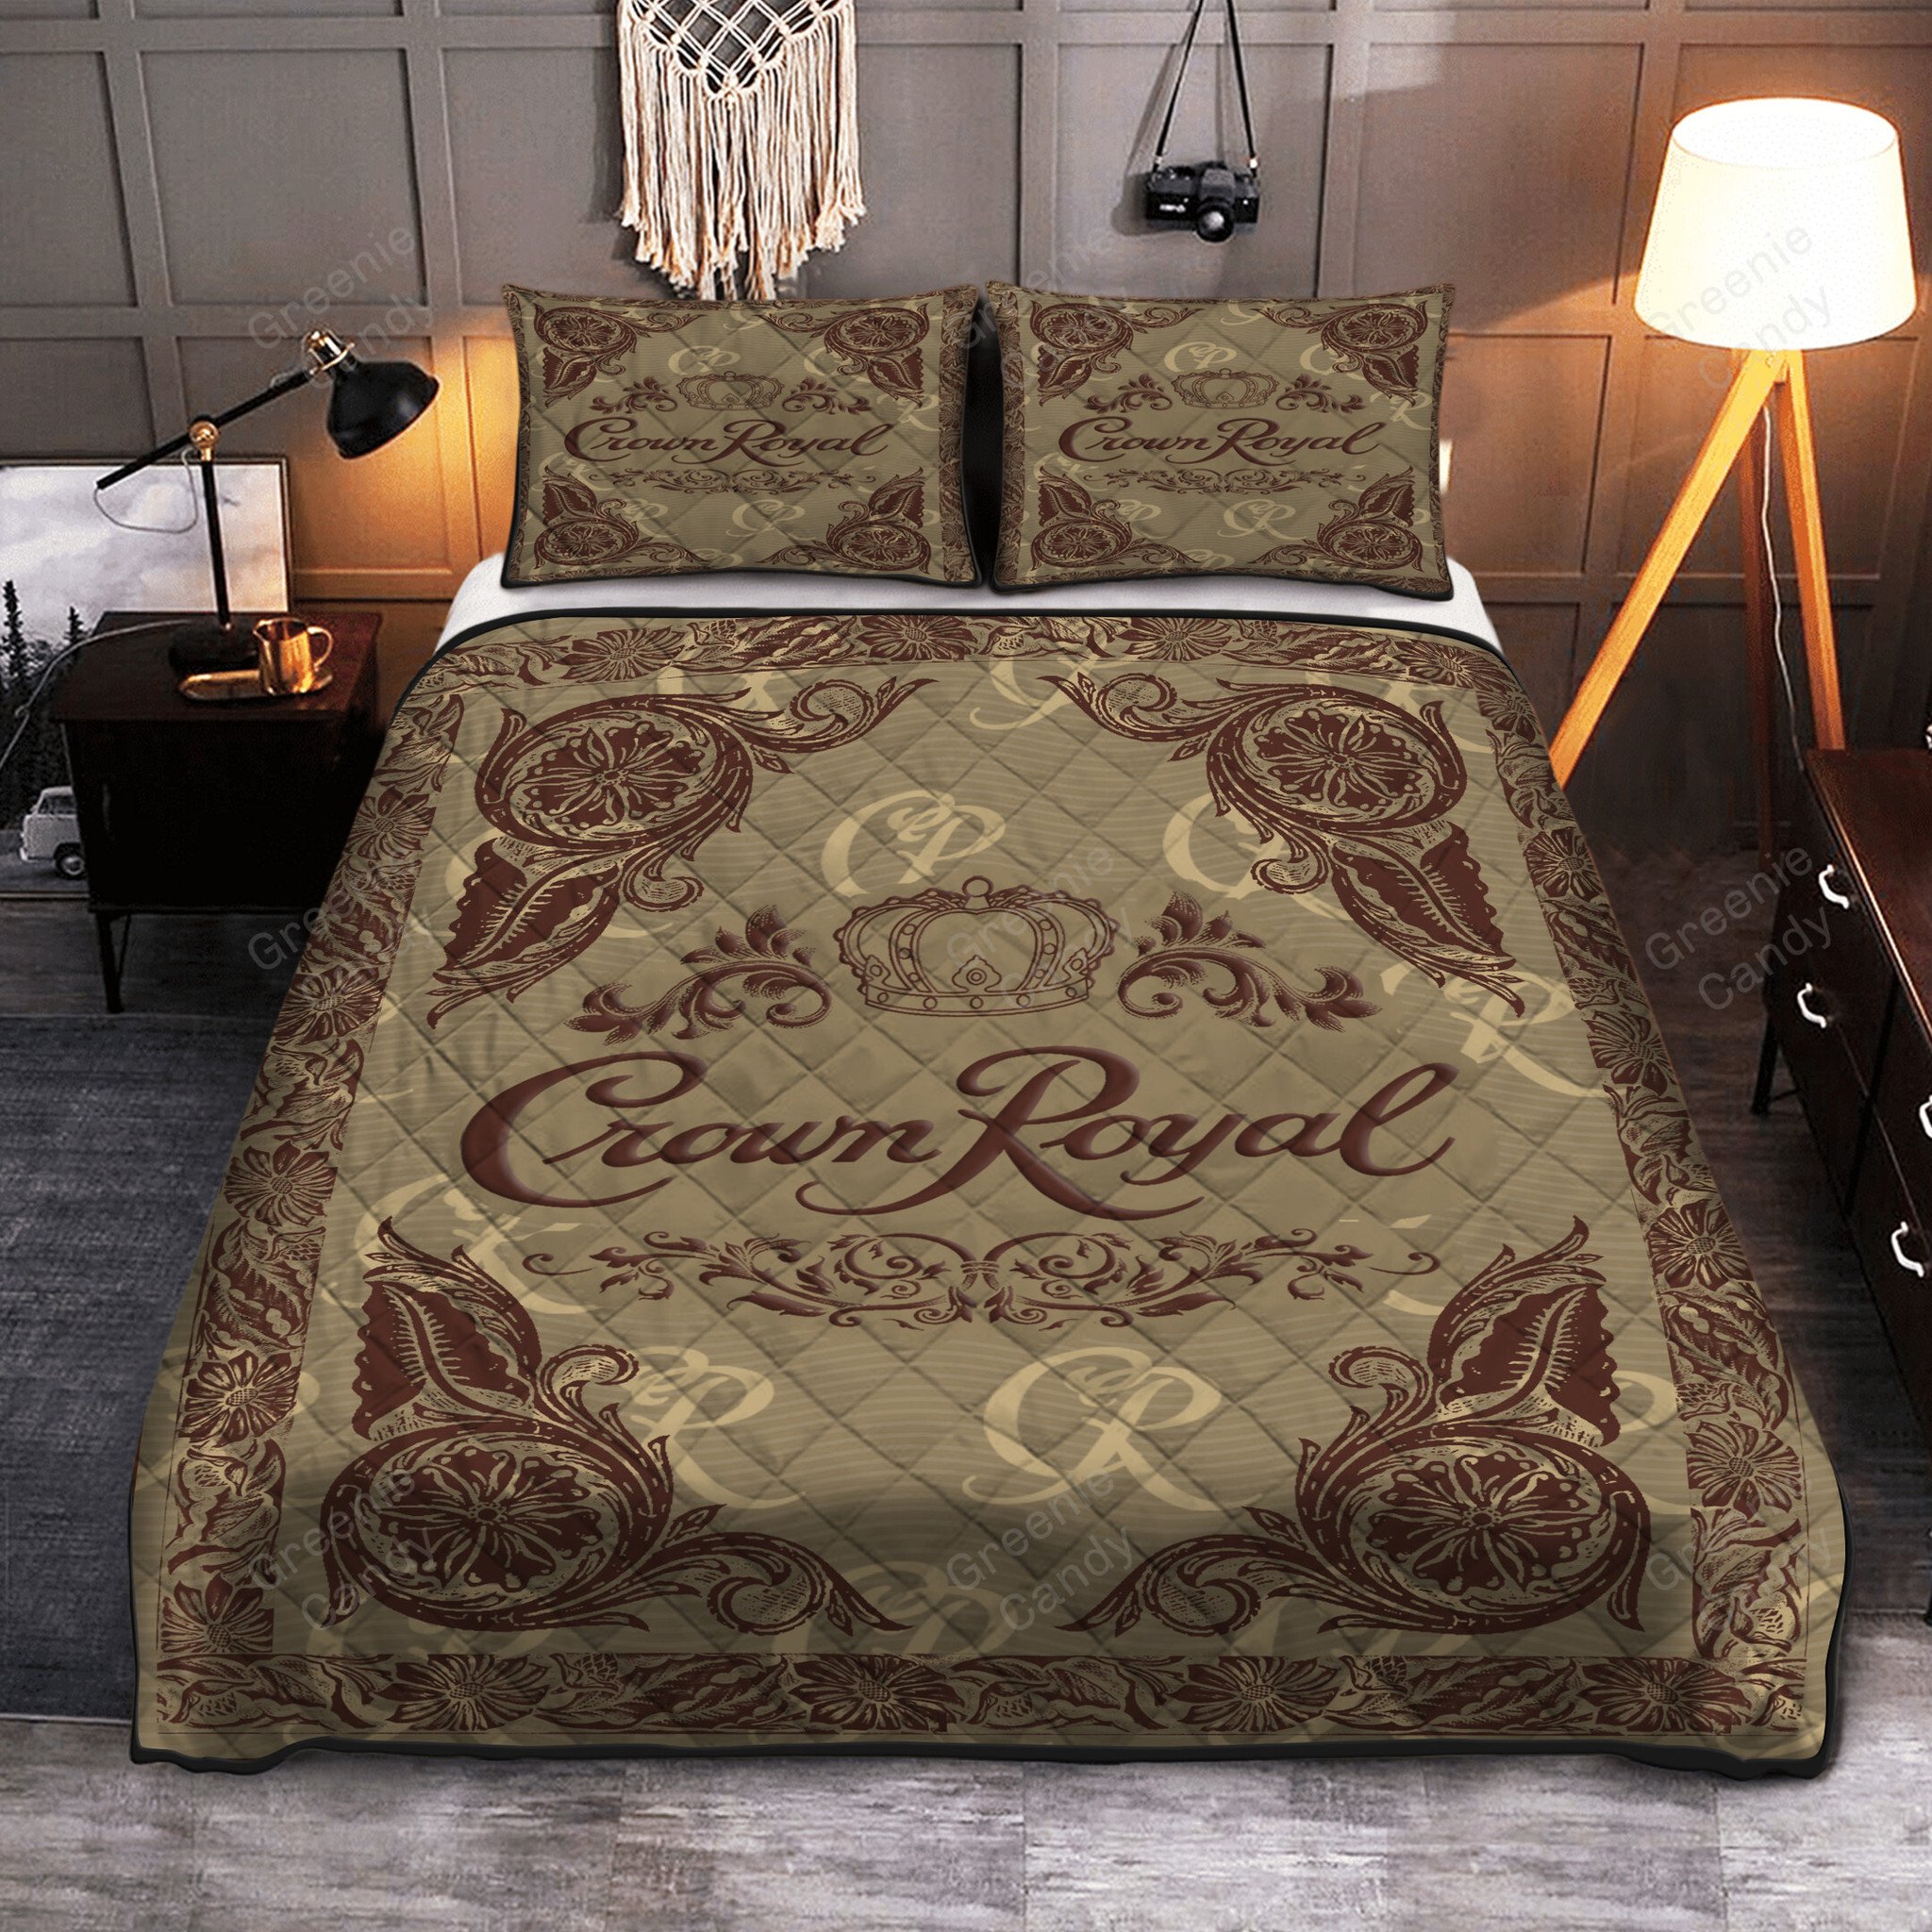 NEW Crown Royal Vanilla Whiskey Bedding Set 2